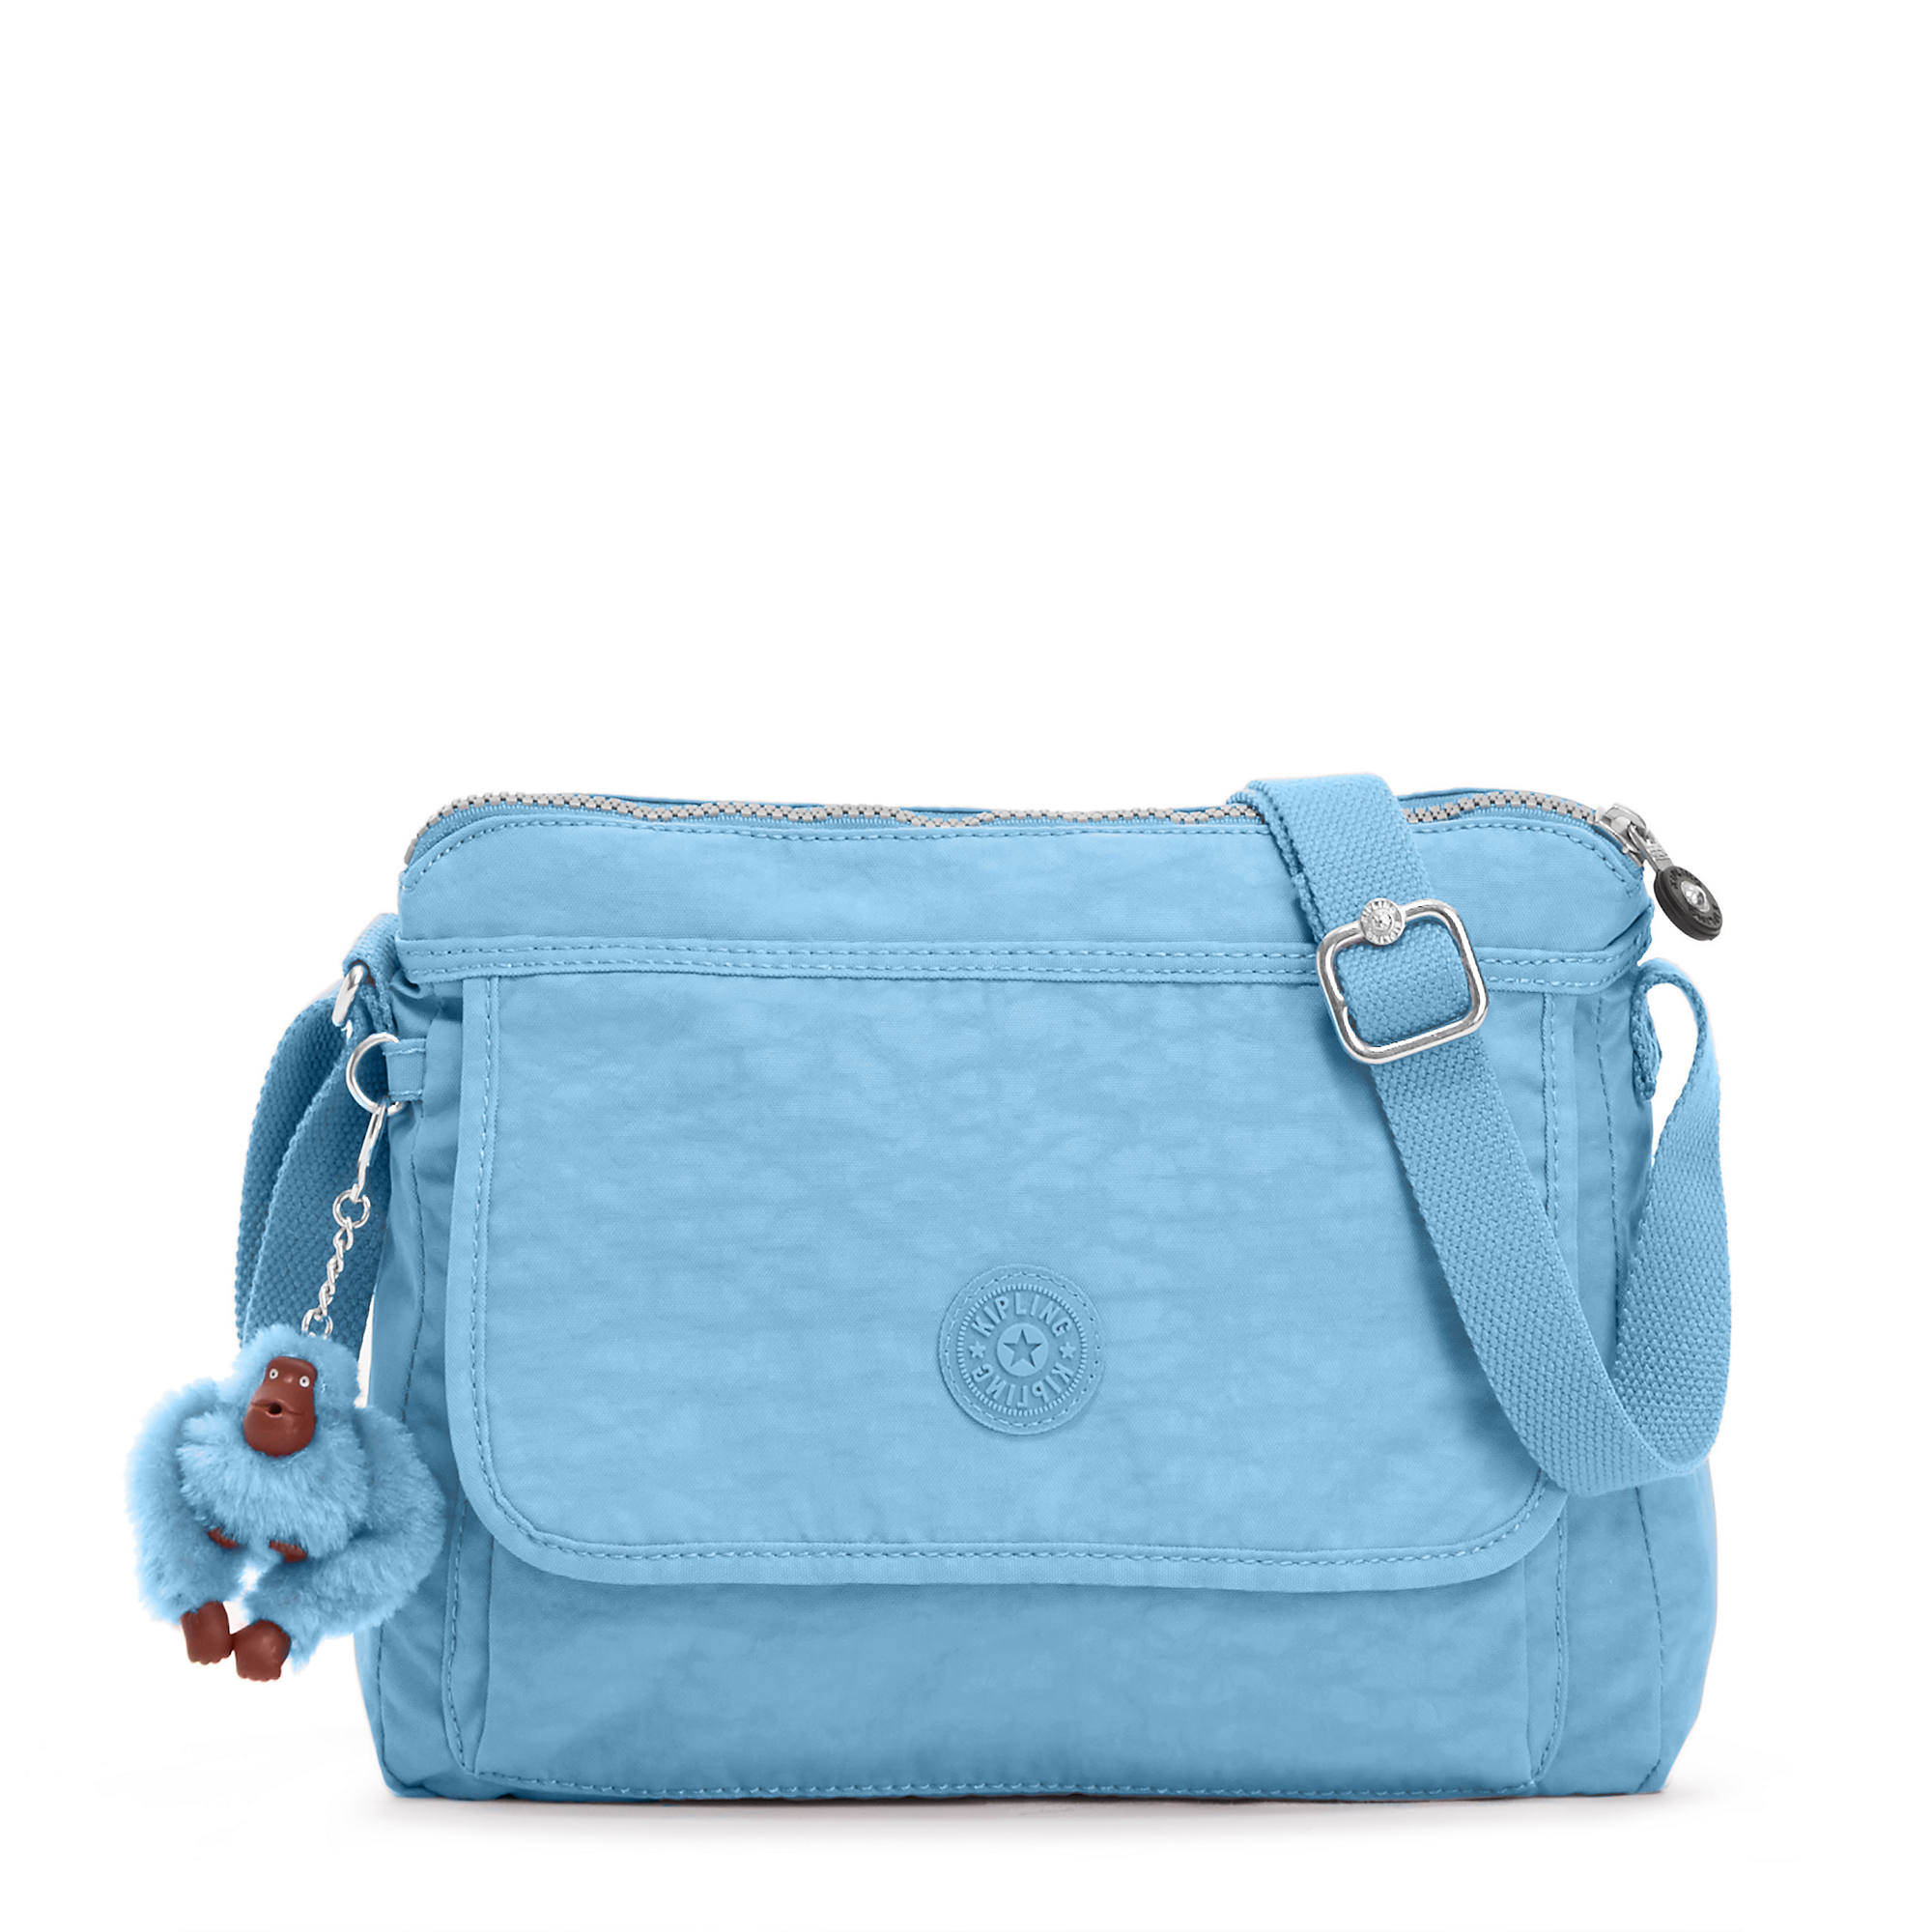 Kipling Aisling Crossbody Bag | eBay